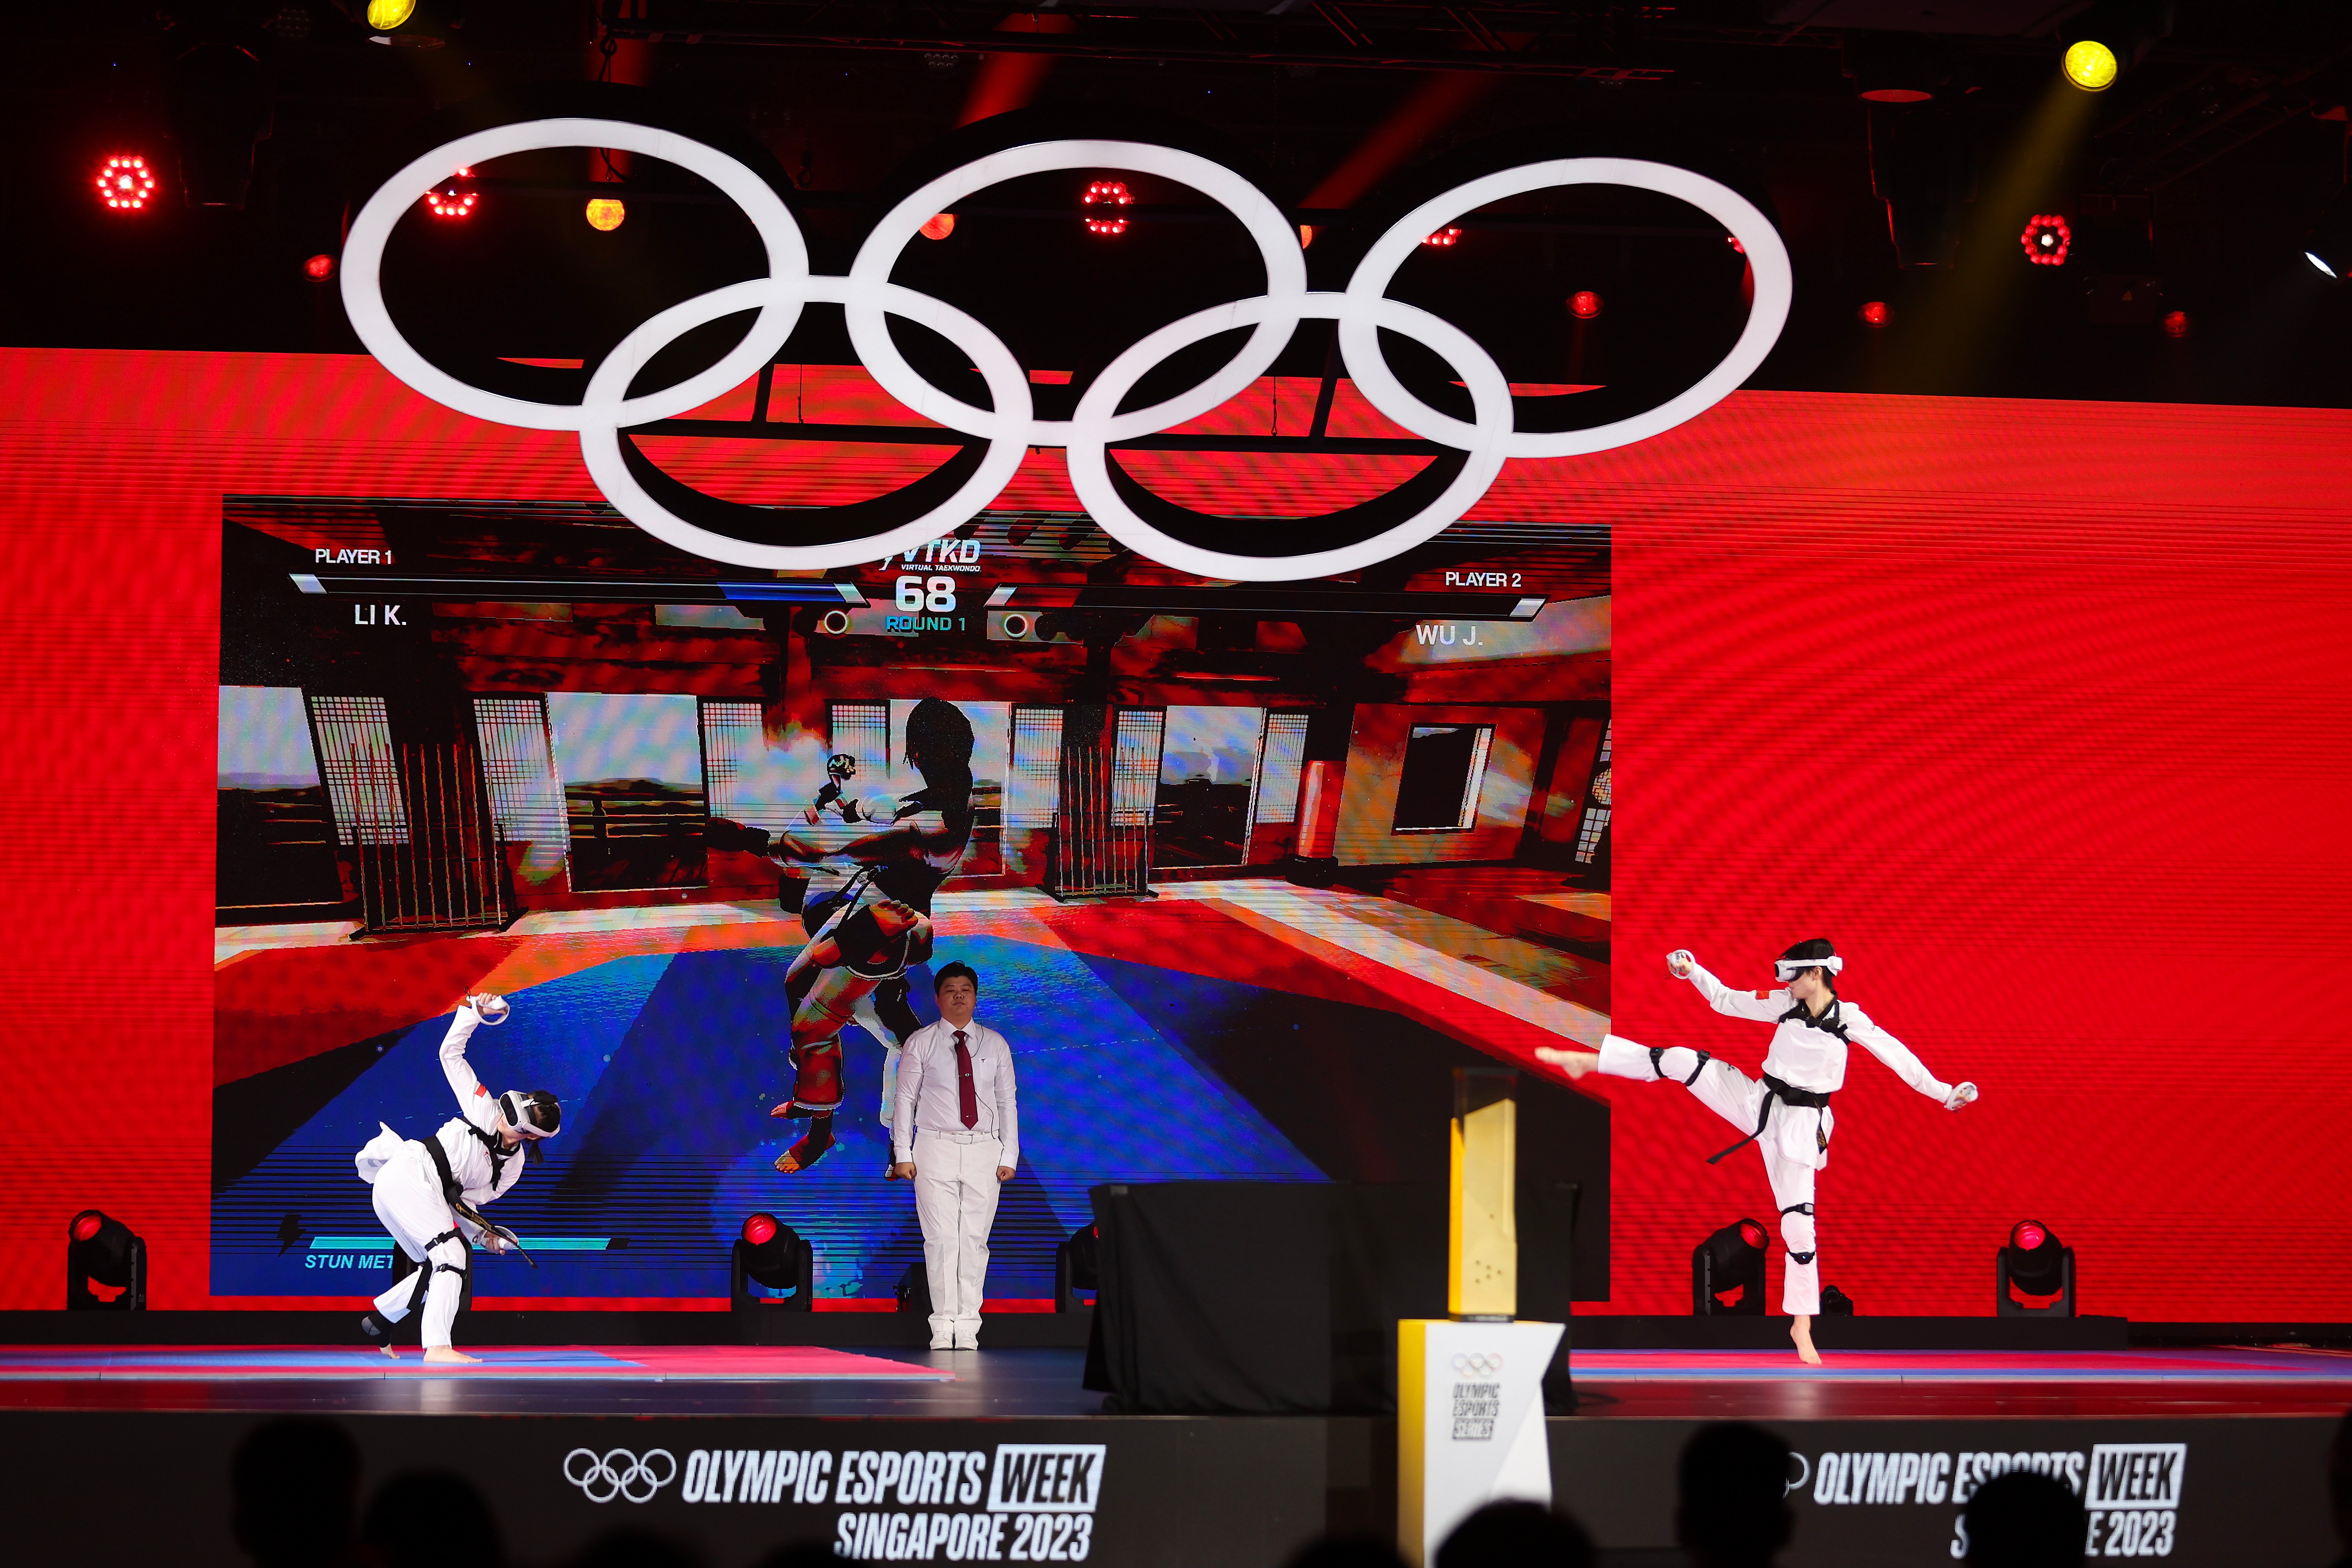 Olympic Esports Week Taekwondo Event 02